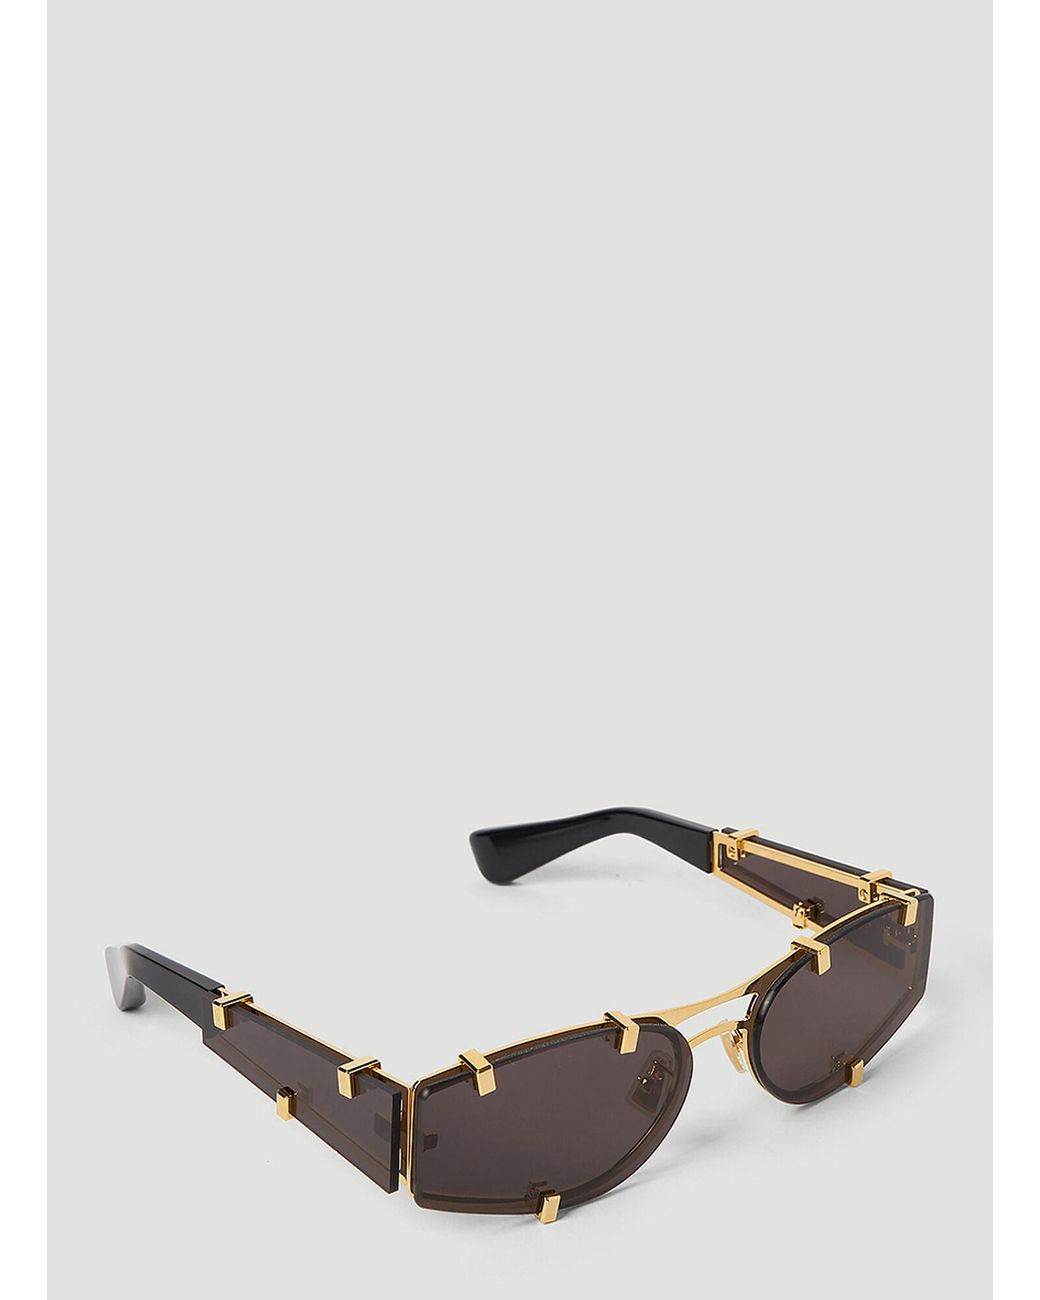 Bottega Veneta Cat-Eye Tinted Sunglasses